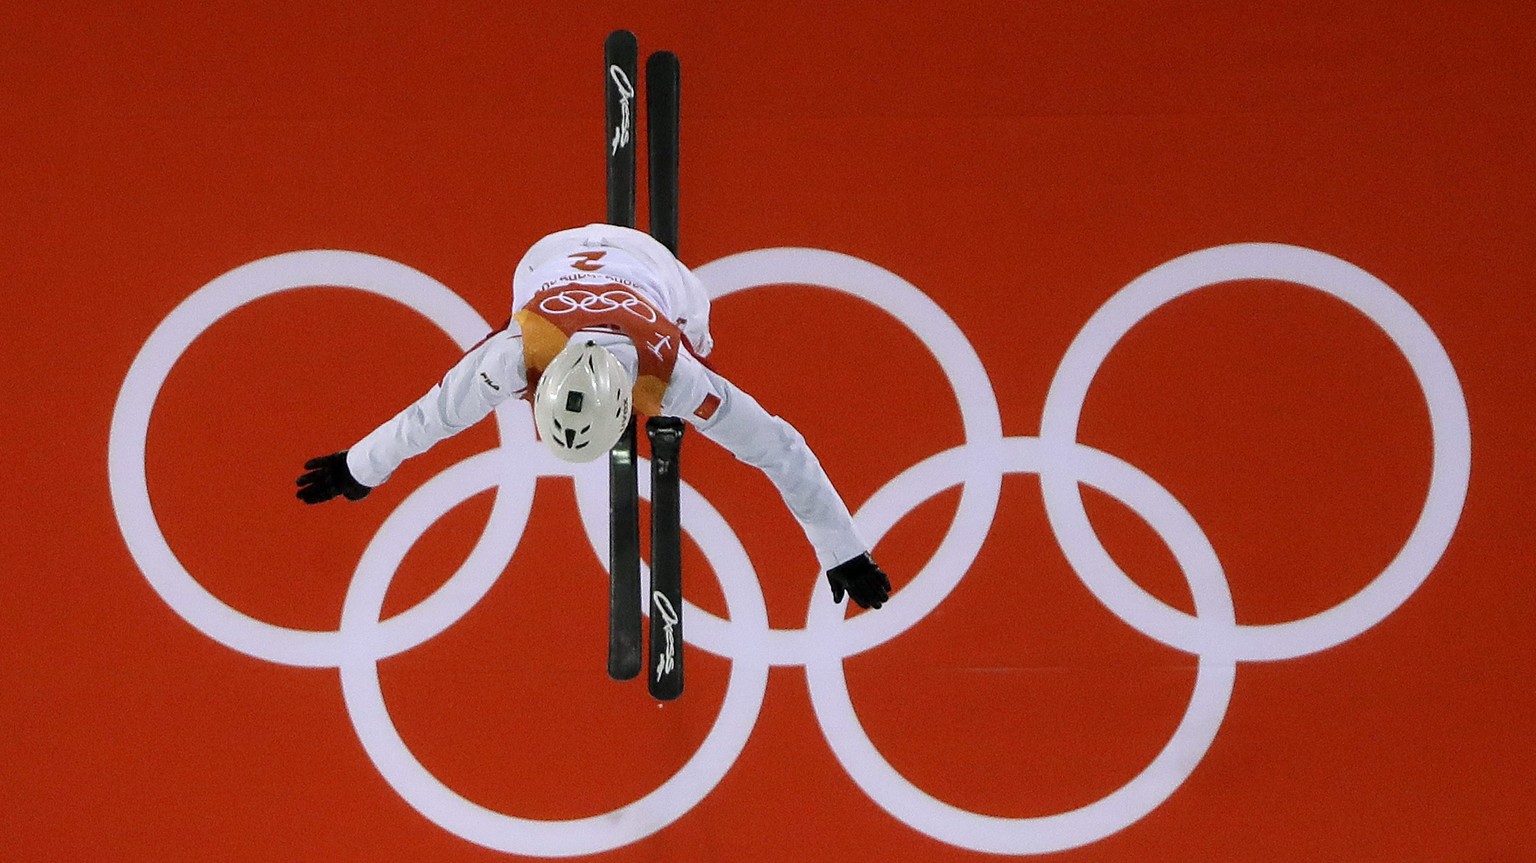 Erfolgreicher Ski-nese: Jia Zongyang gewinnt in Pyeongchang Aerials-Silber.